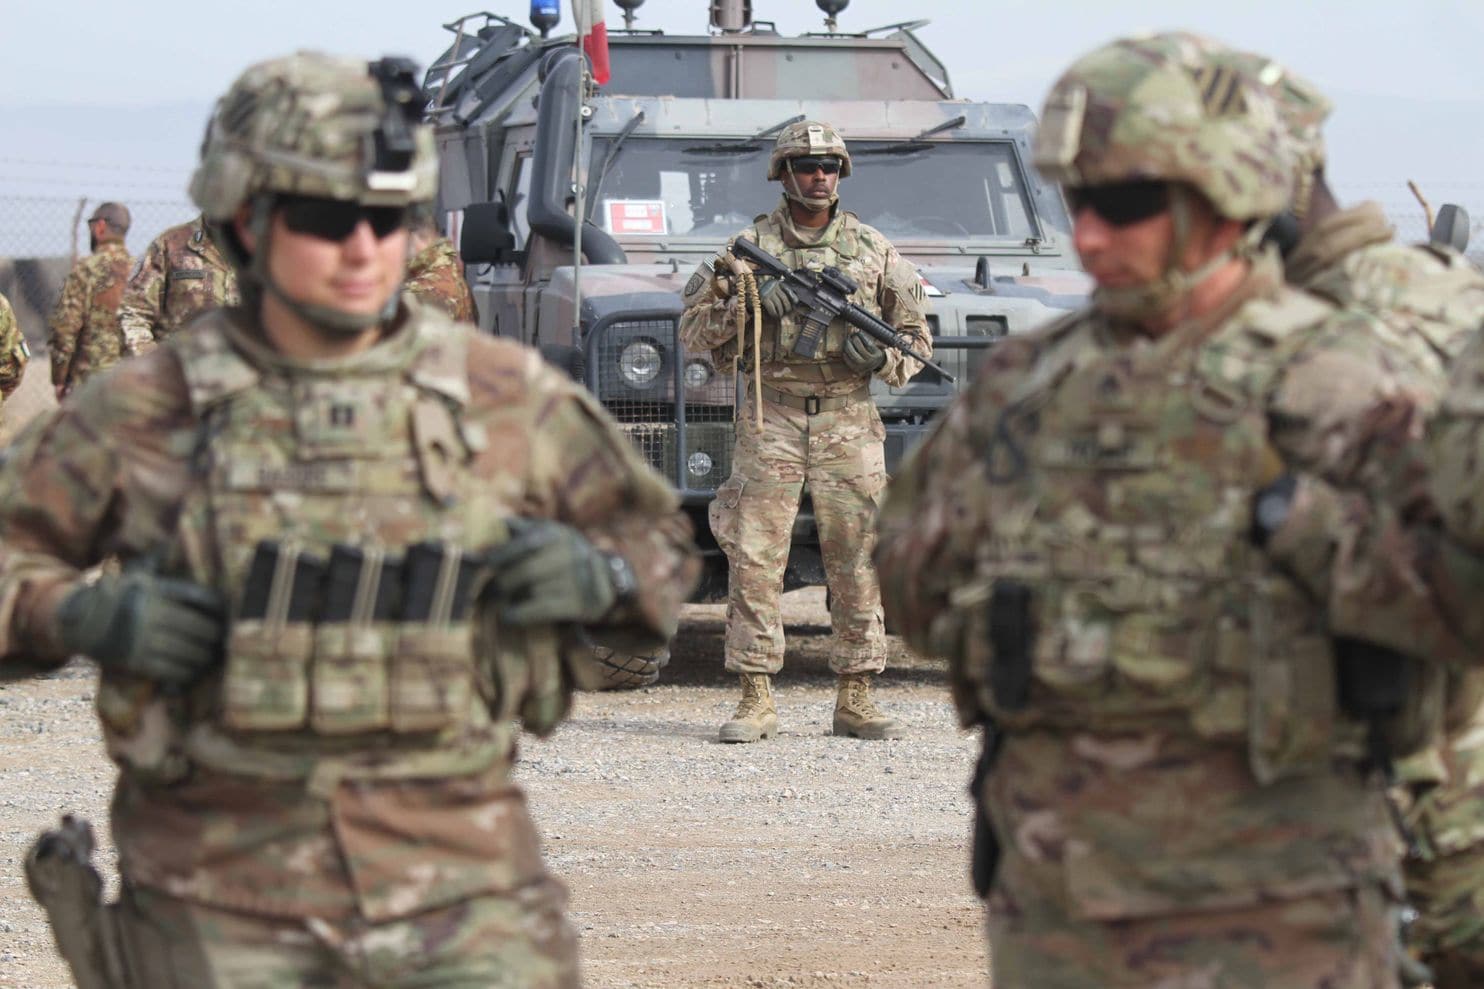 Pentagon confirms death of U.S. soldier in Afghanistan